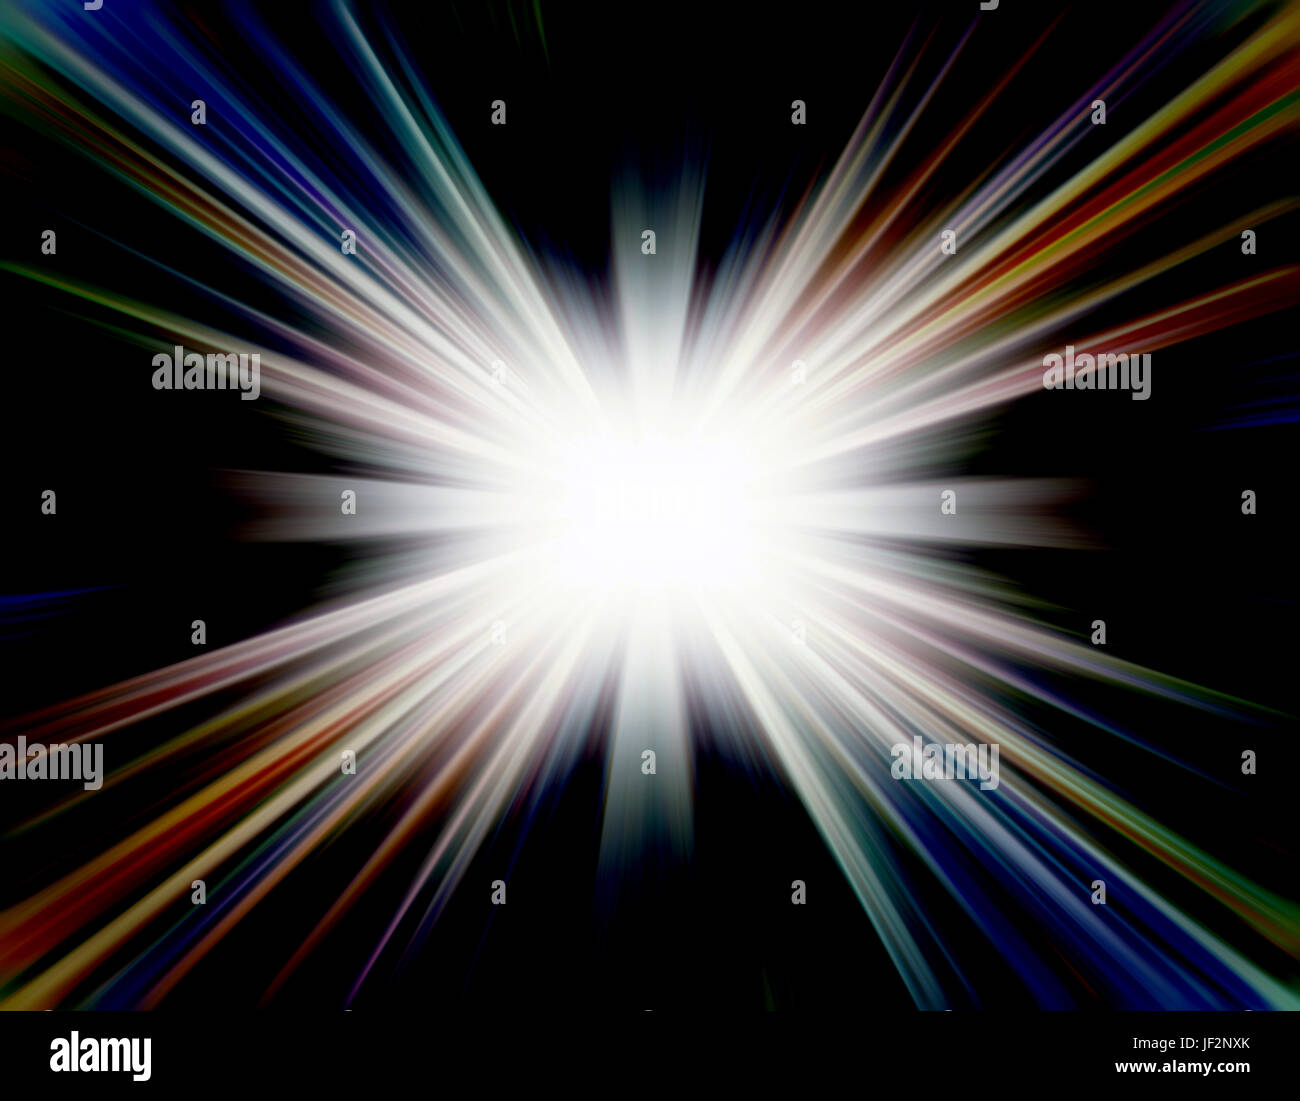 Dazzling light beams background Stock Photo